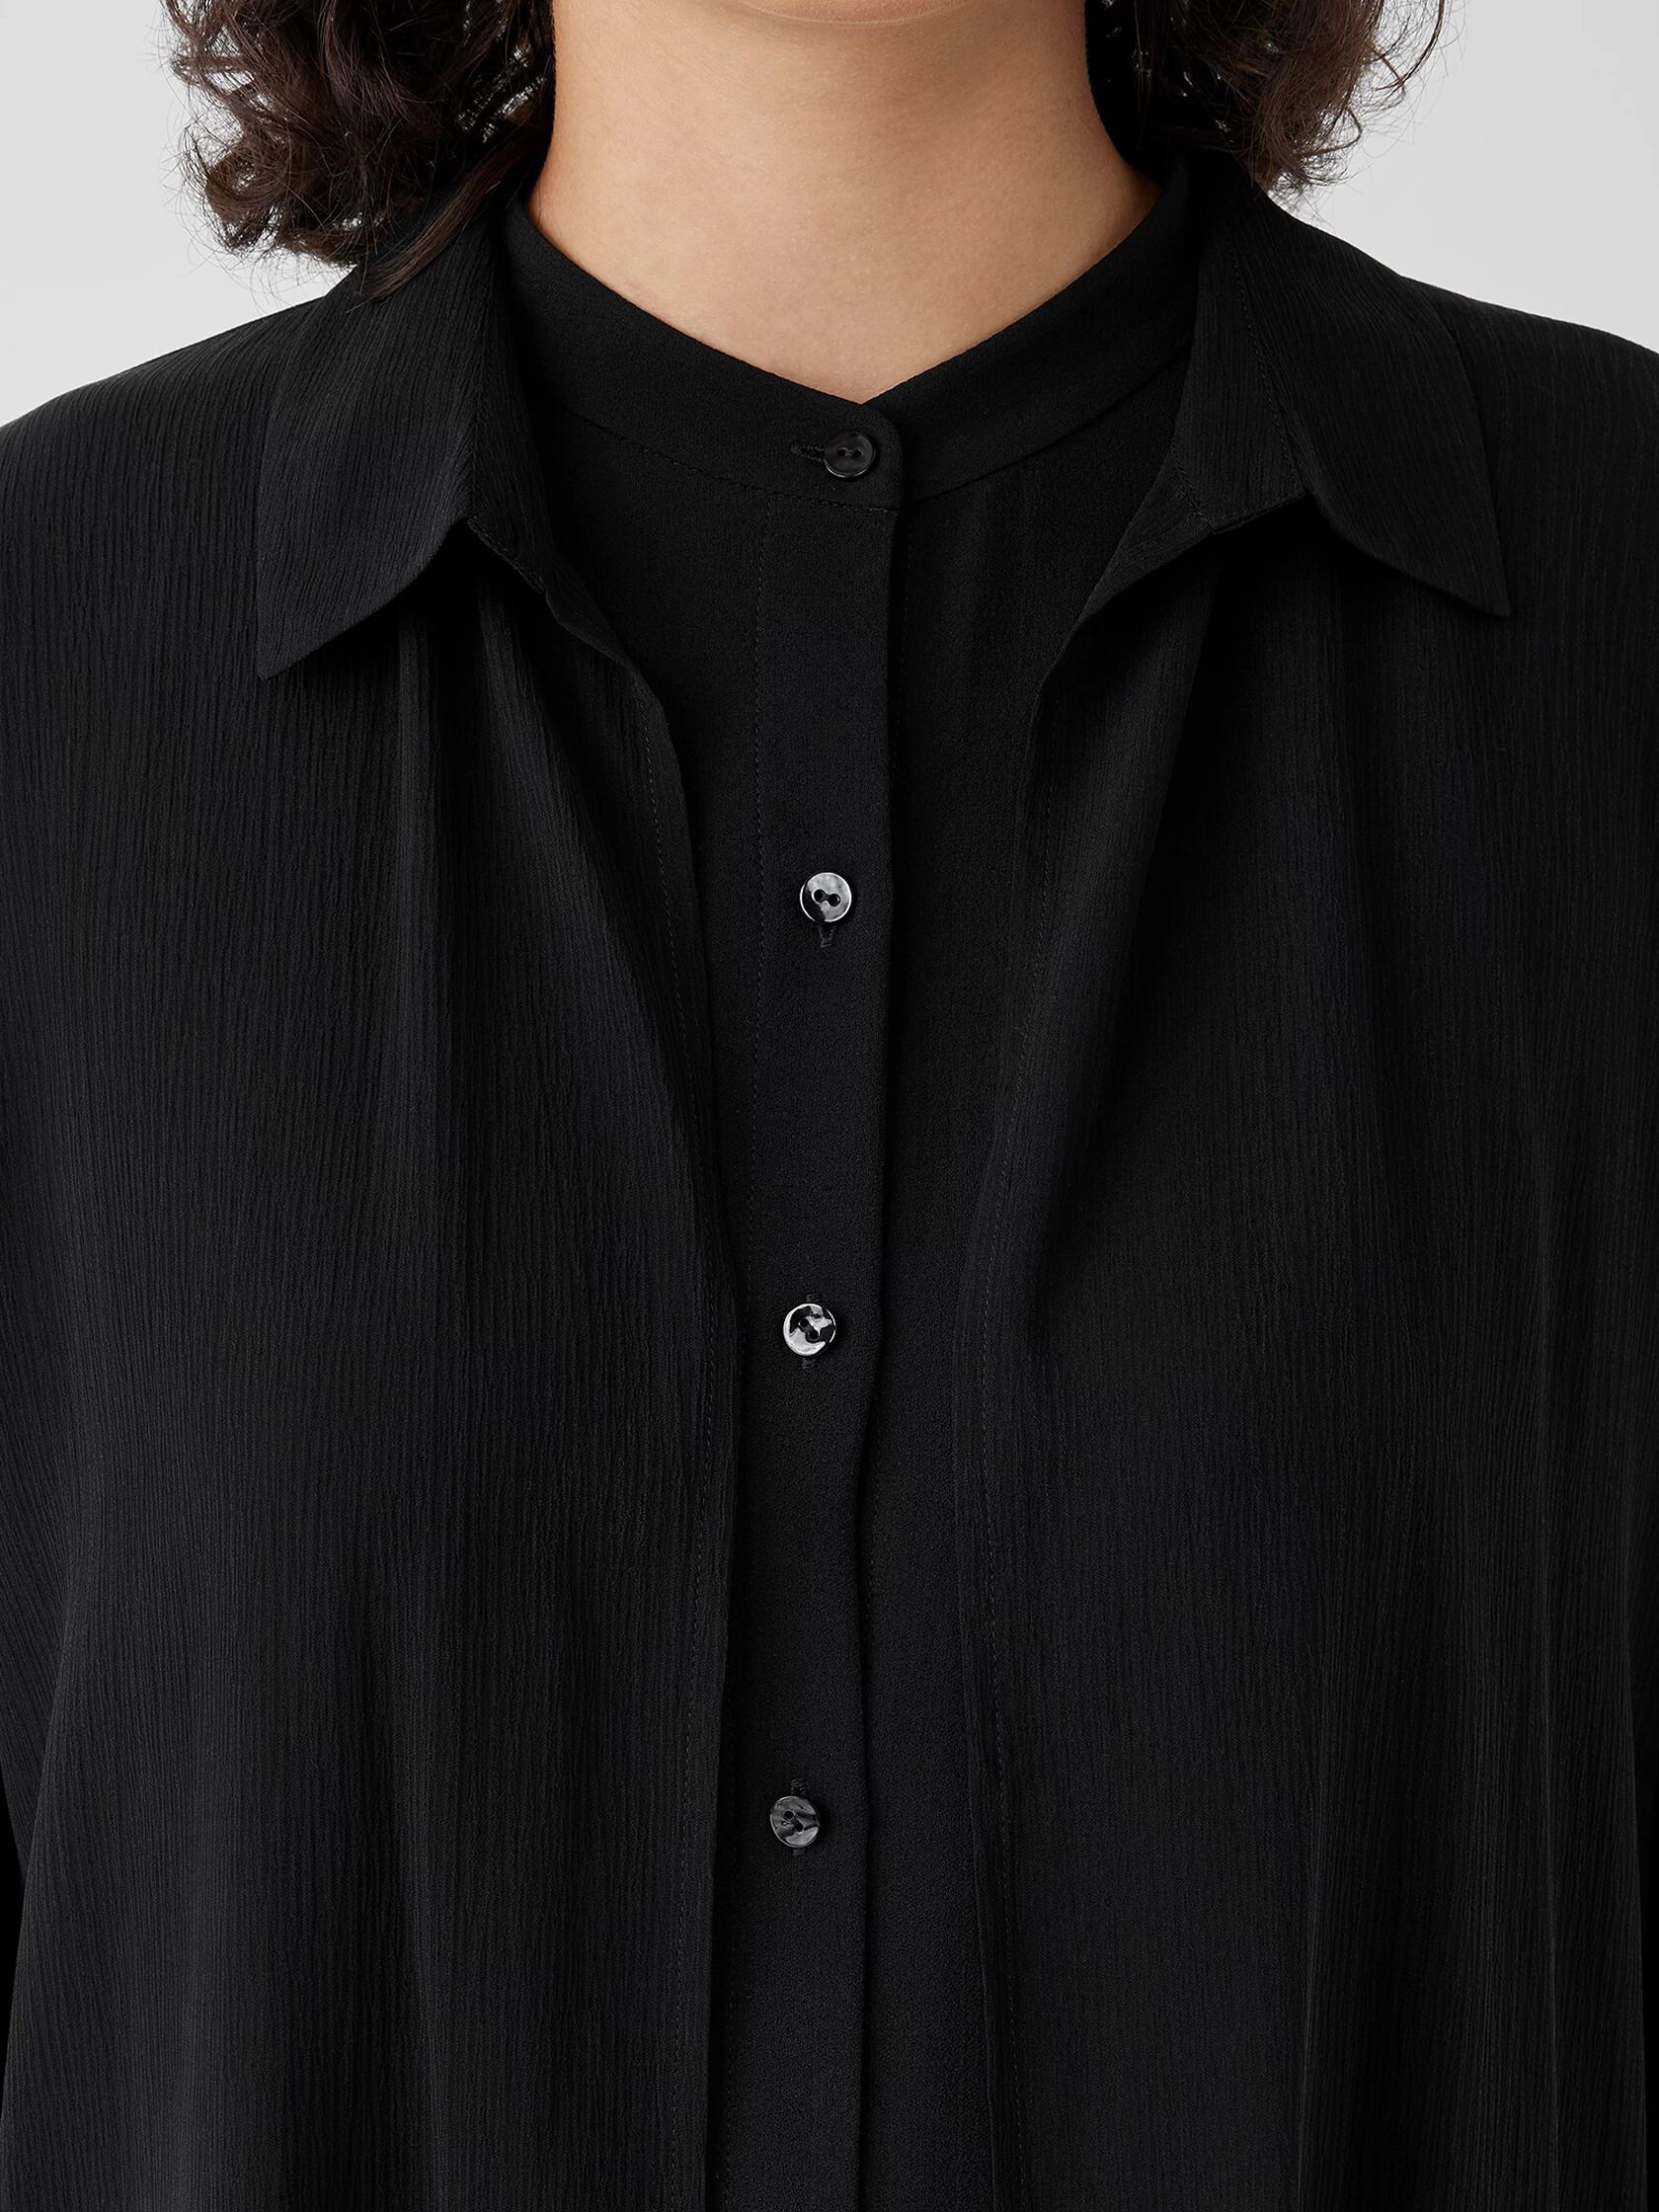 Crinkled Sheer Silk Classic Collar Jacket